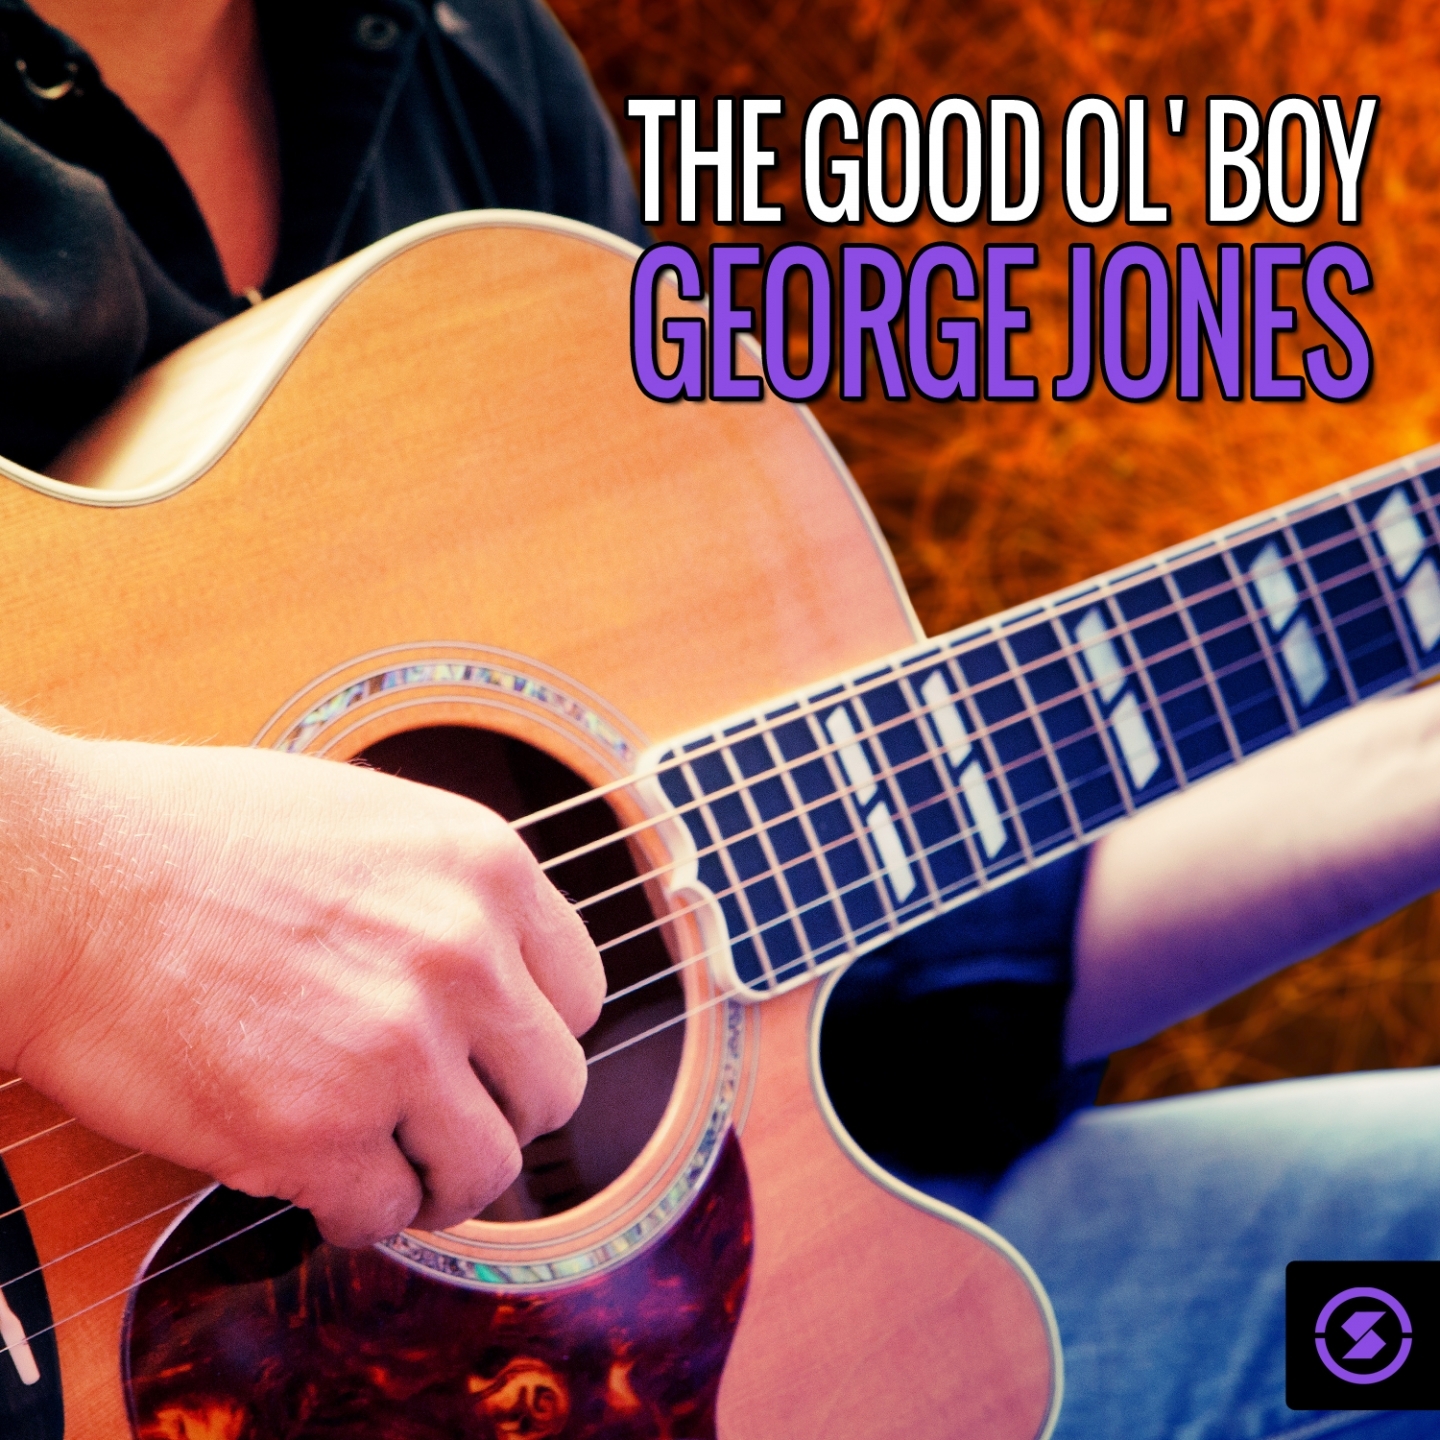 The Good Ol' Boy George Jones